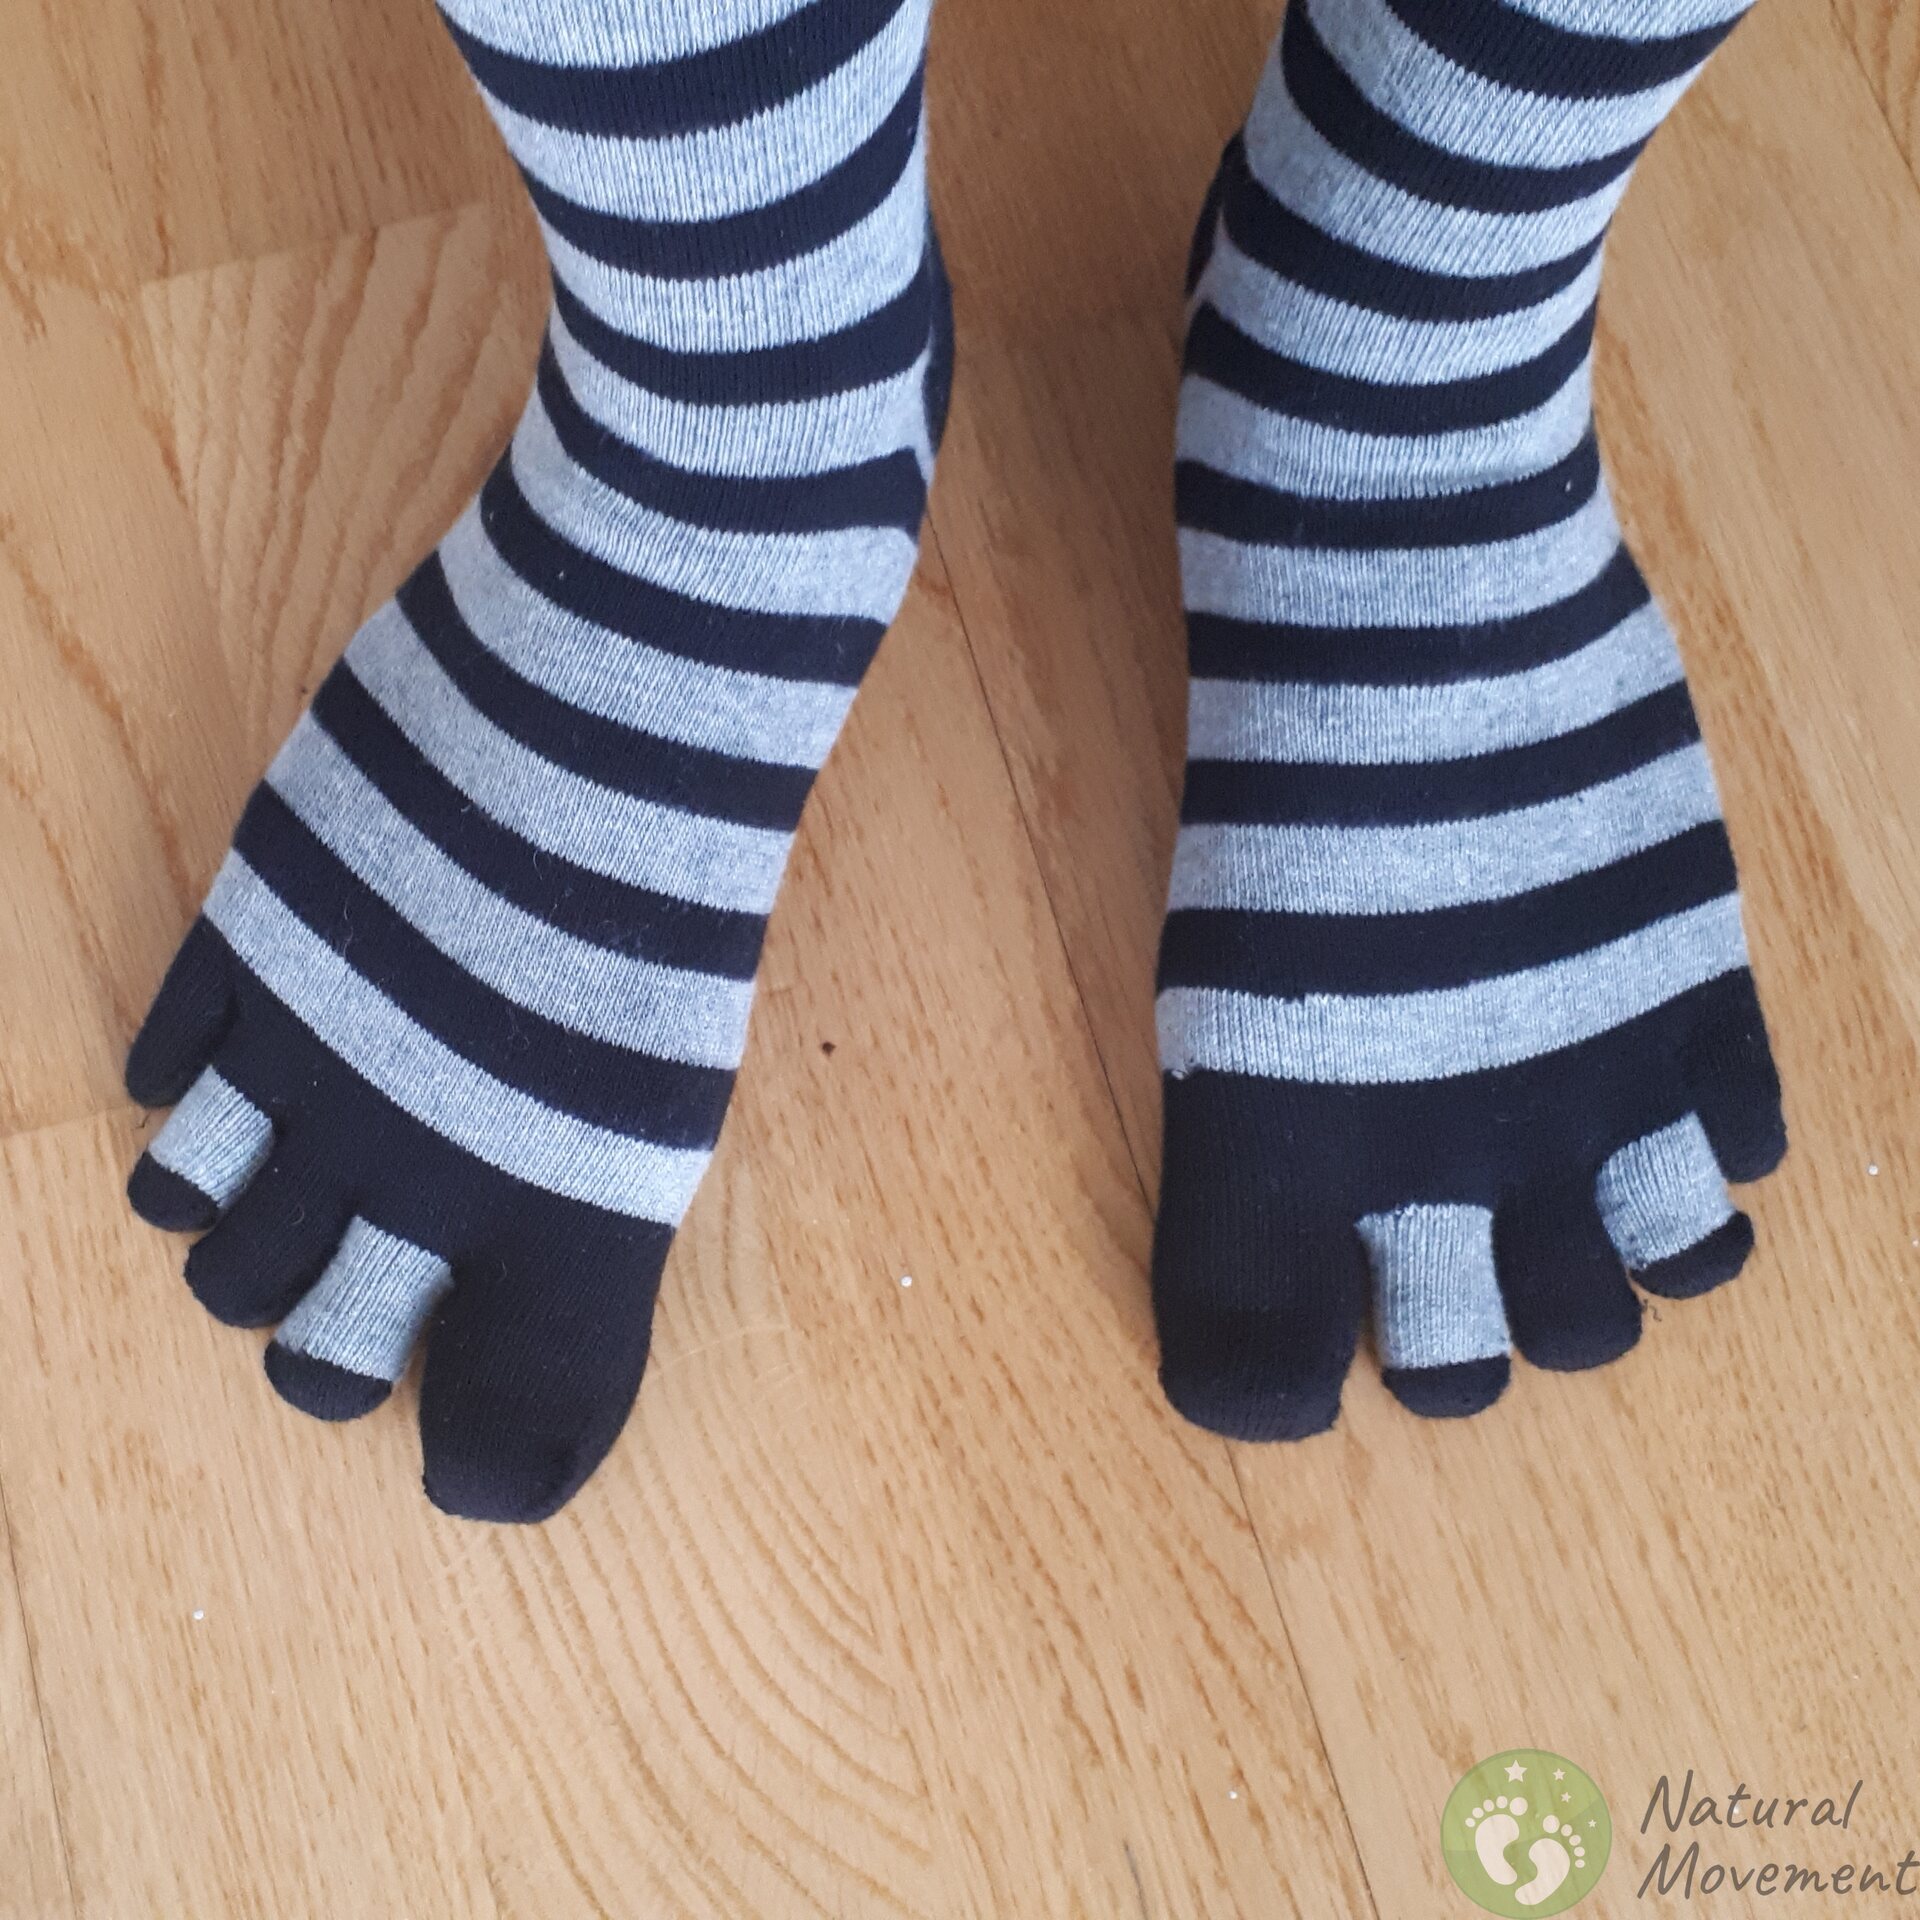 TOETOE Essential Anklet, Casual socks